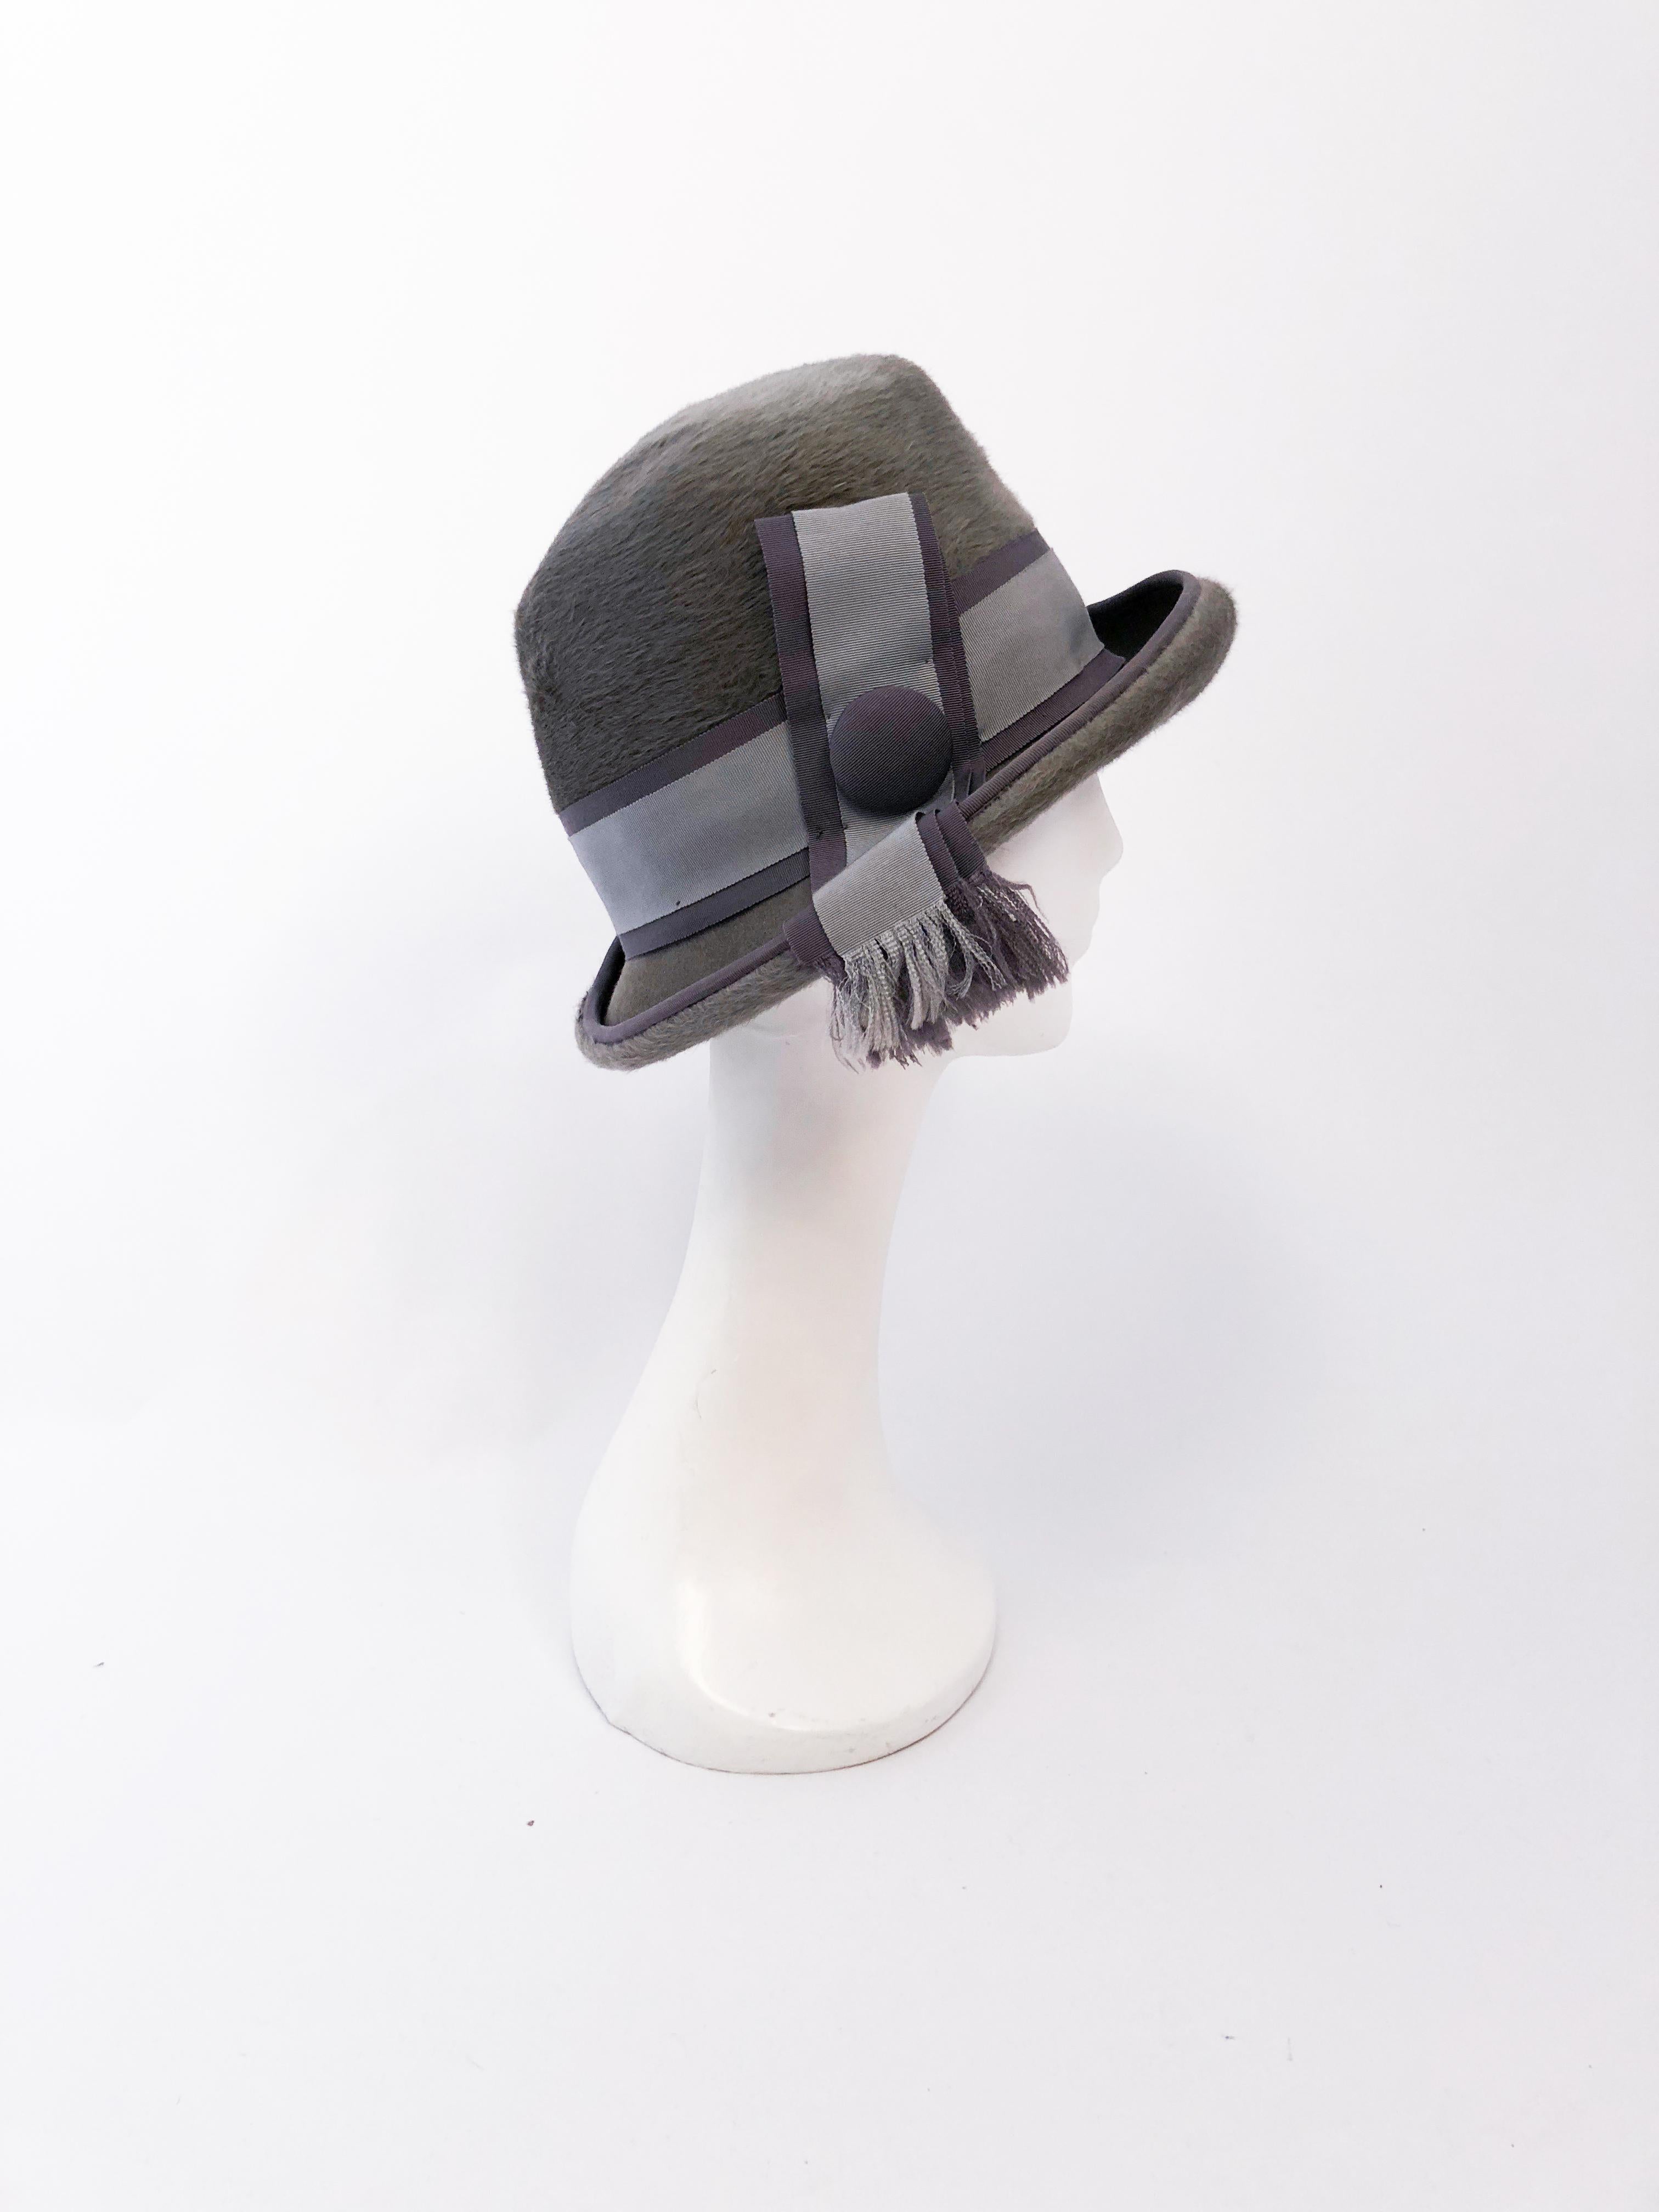 grey felt hat